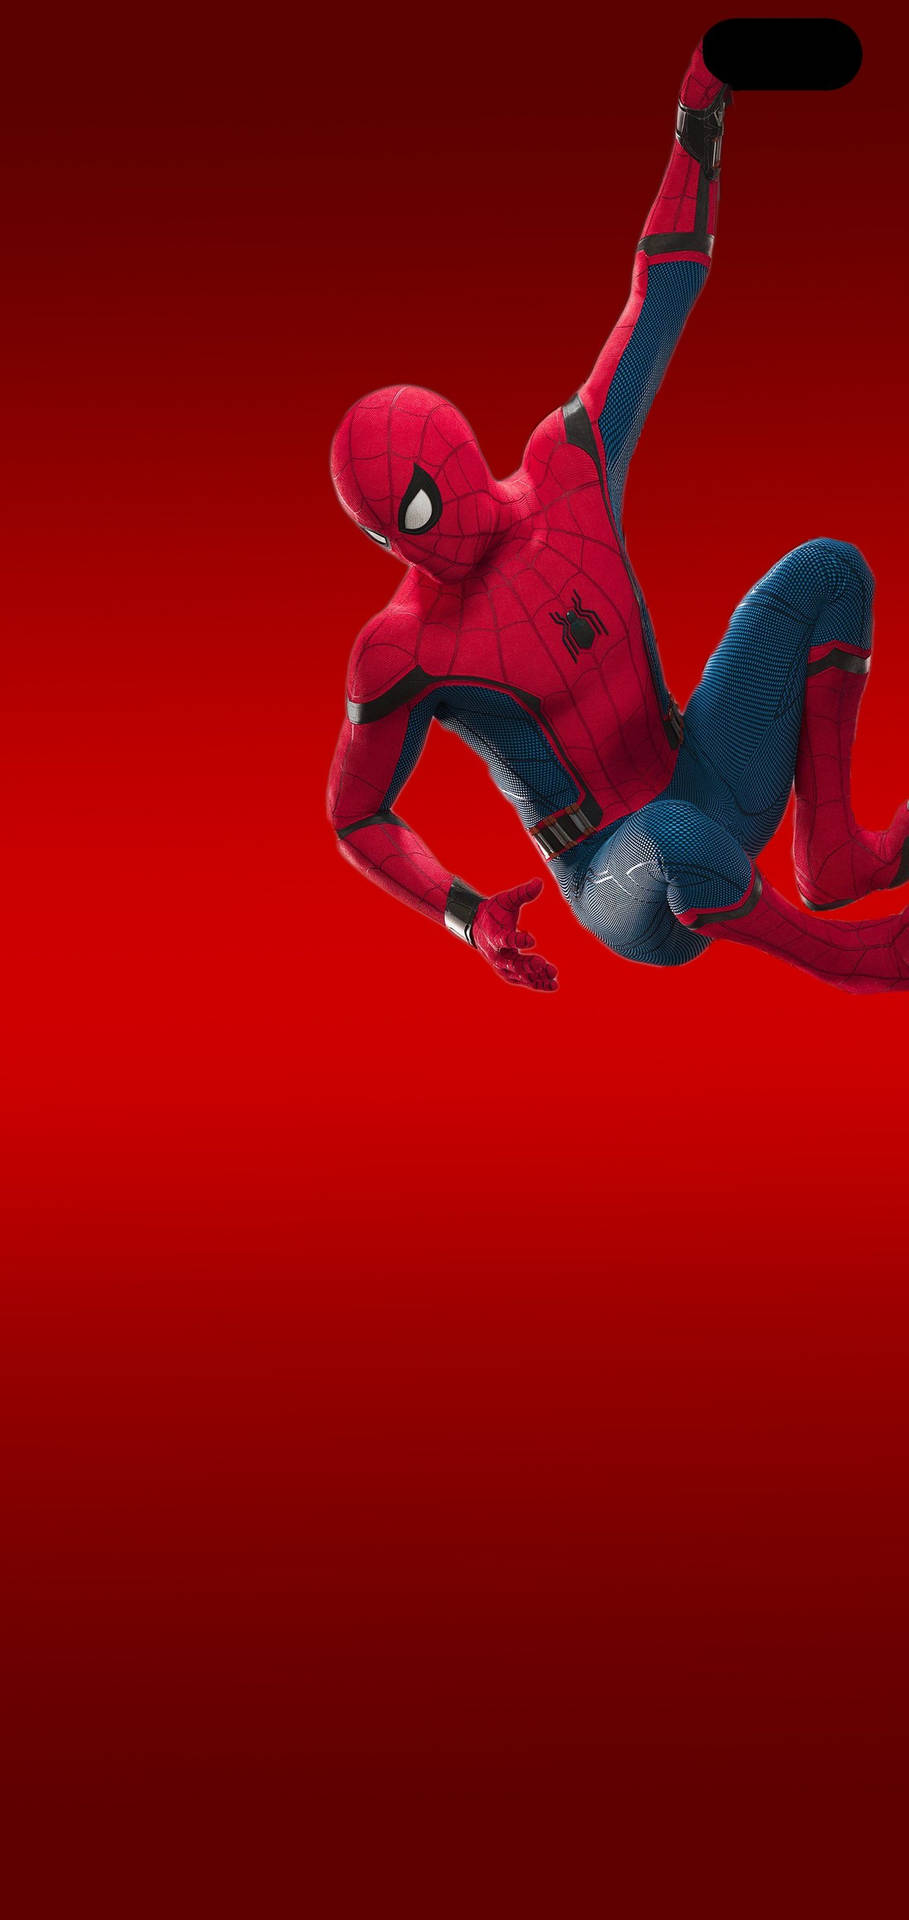 S10+fantastiska Spiderman-tapeter. Wallpaper